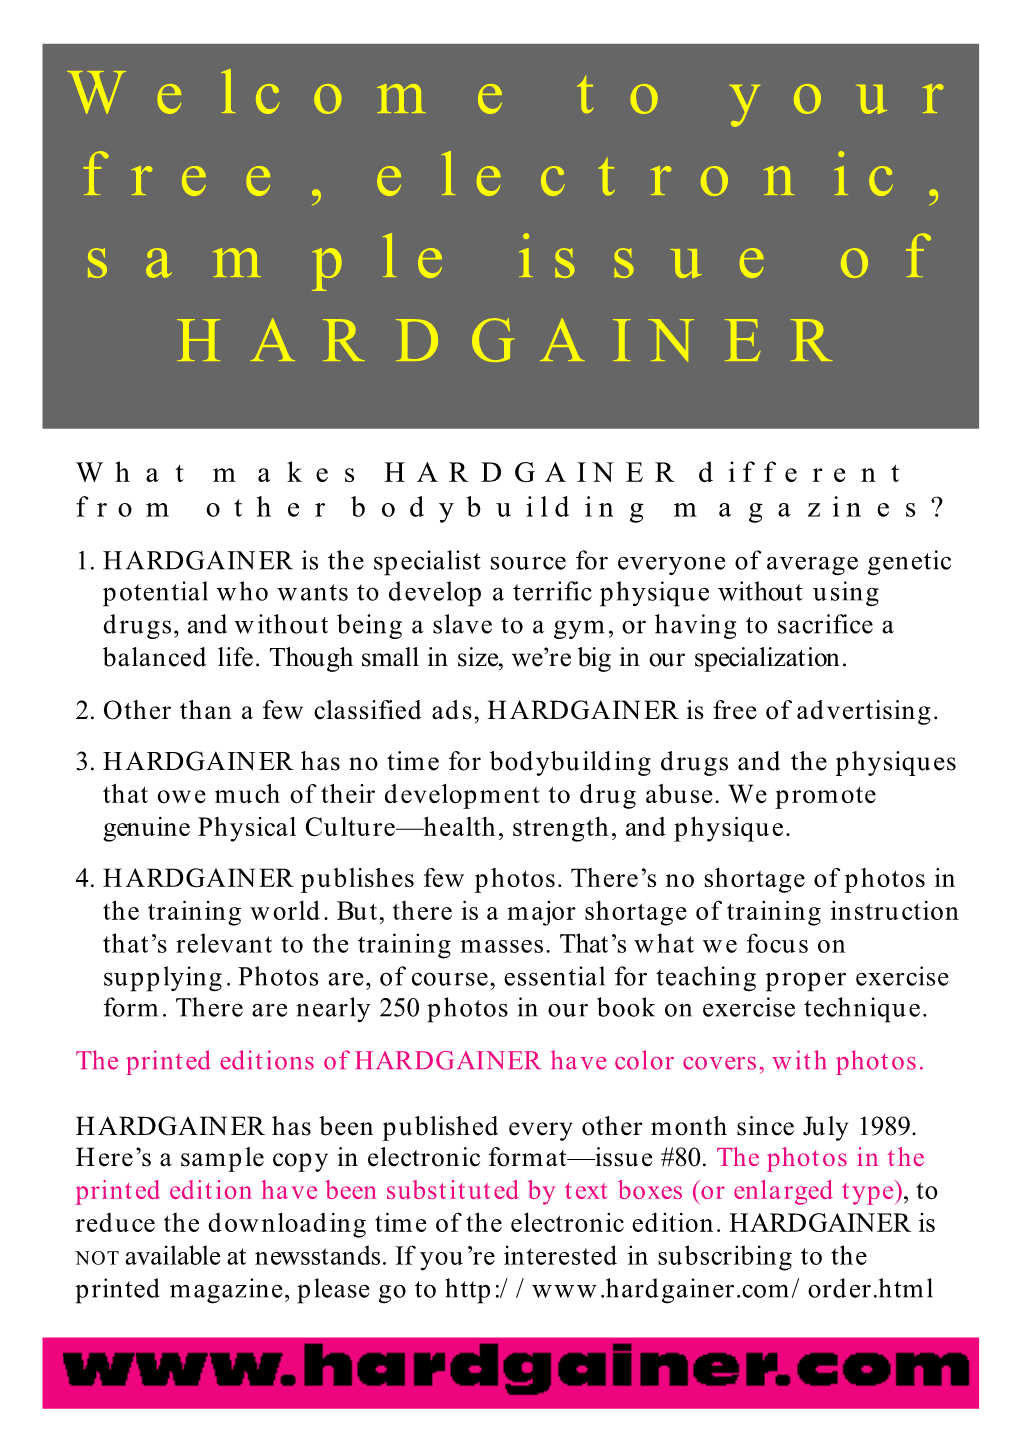 FREE Issue of Hardgainer Magazine!